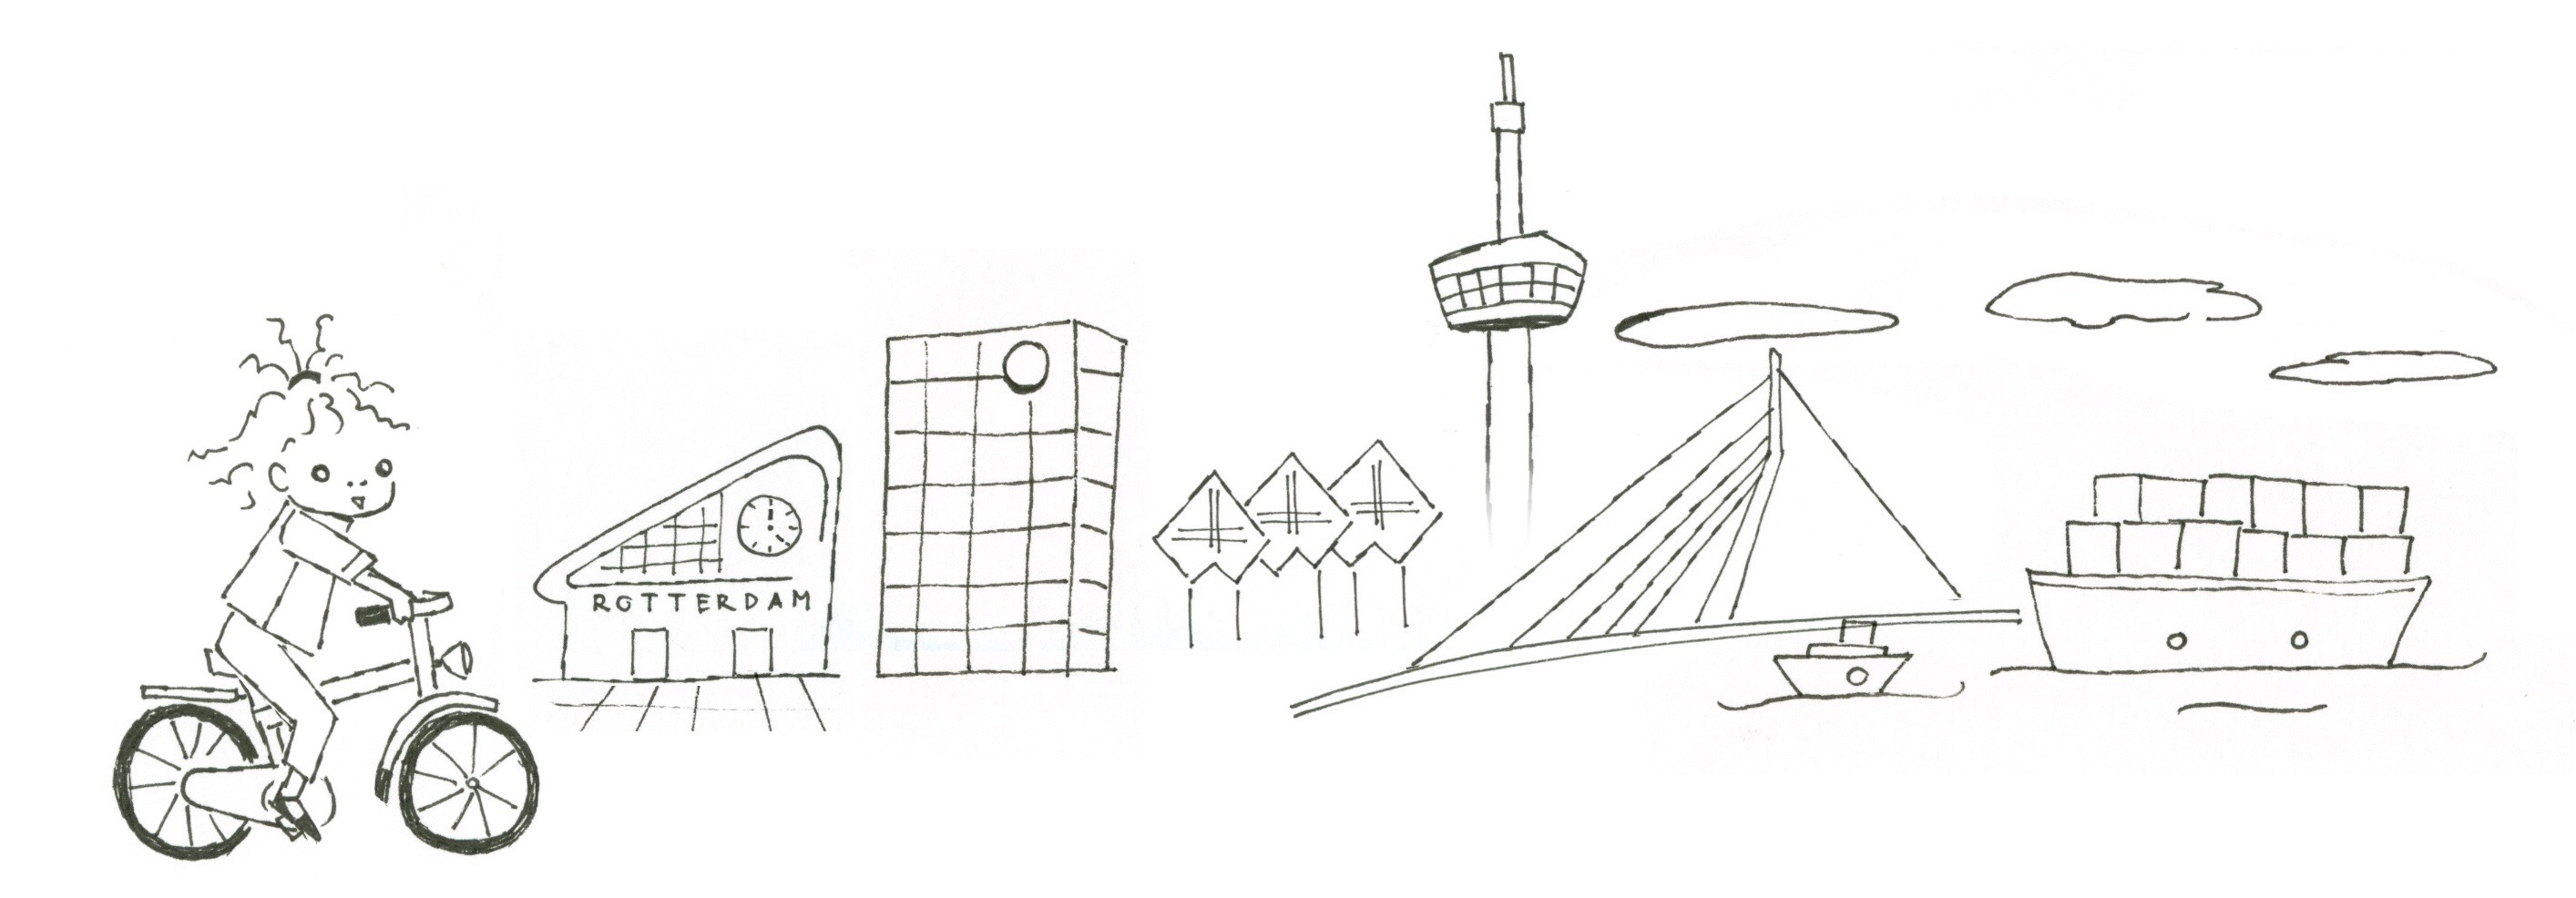 Illustration of Rotterdam Skyline kid on bicycle created by Elizabet Vukovic